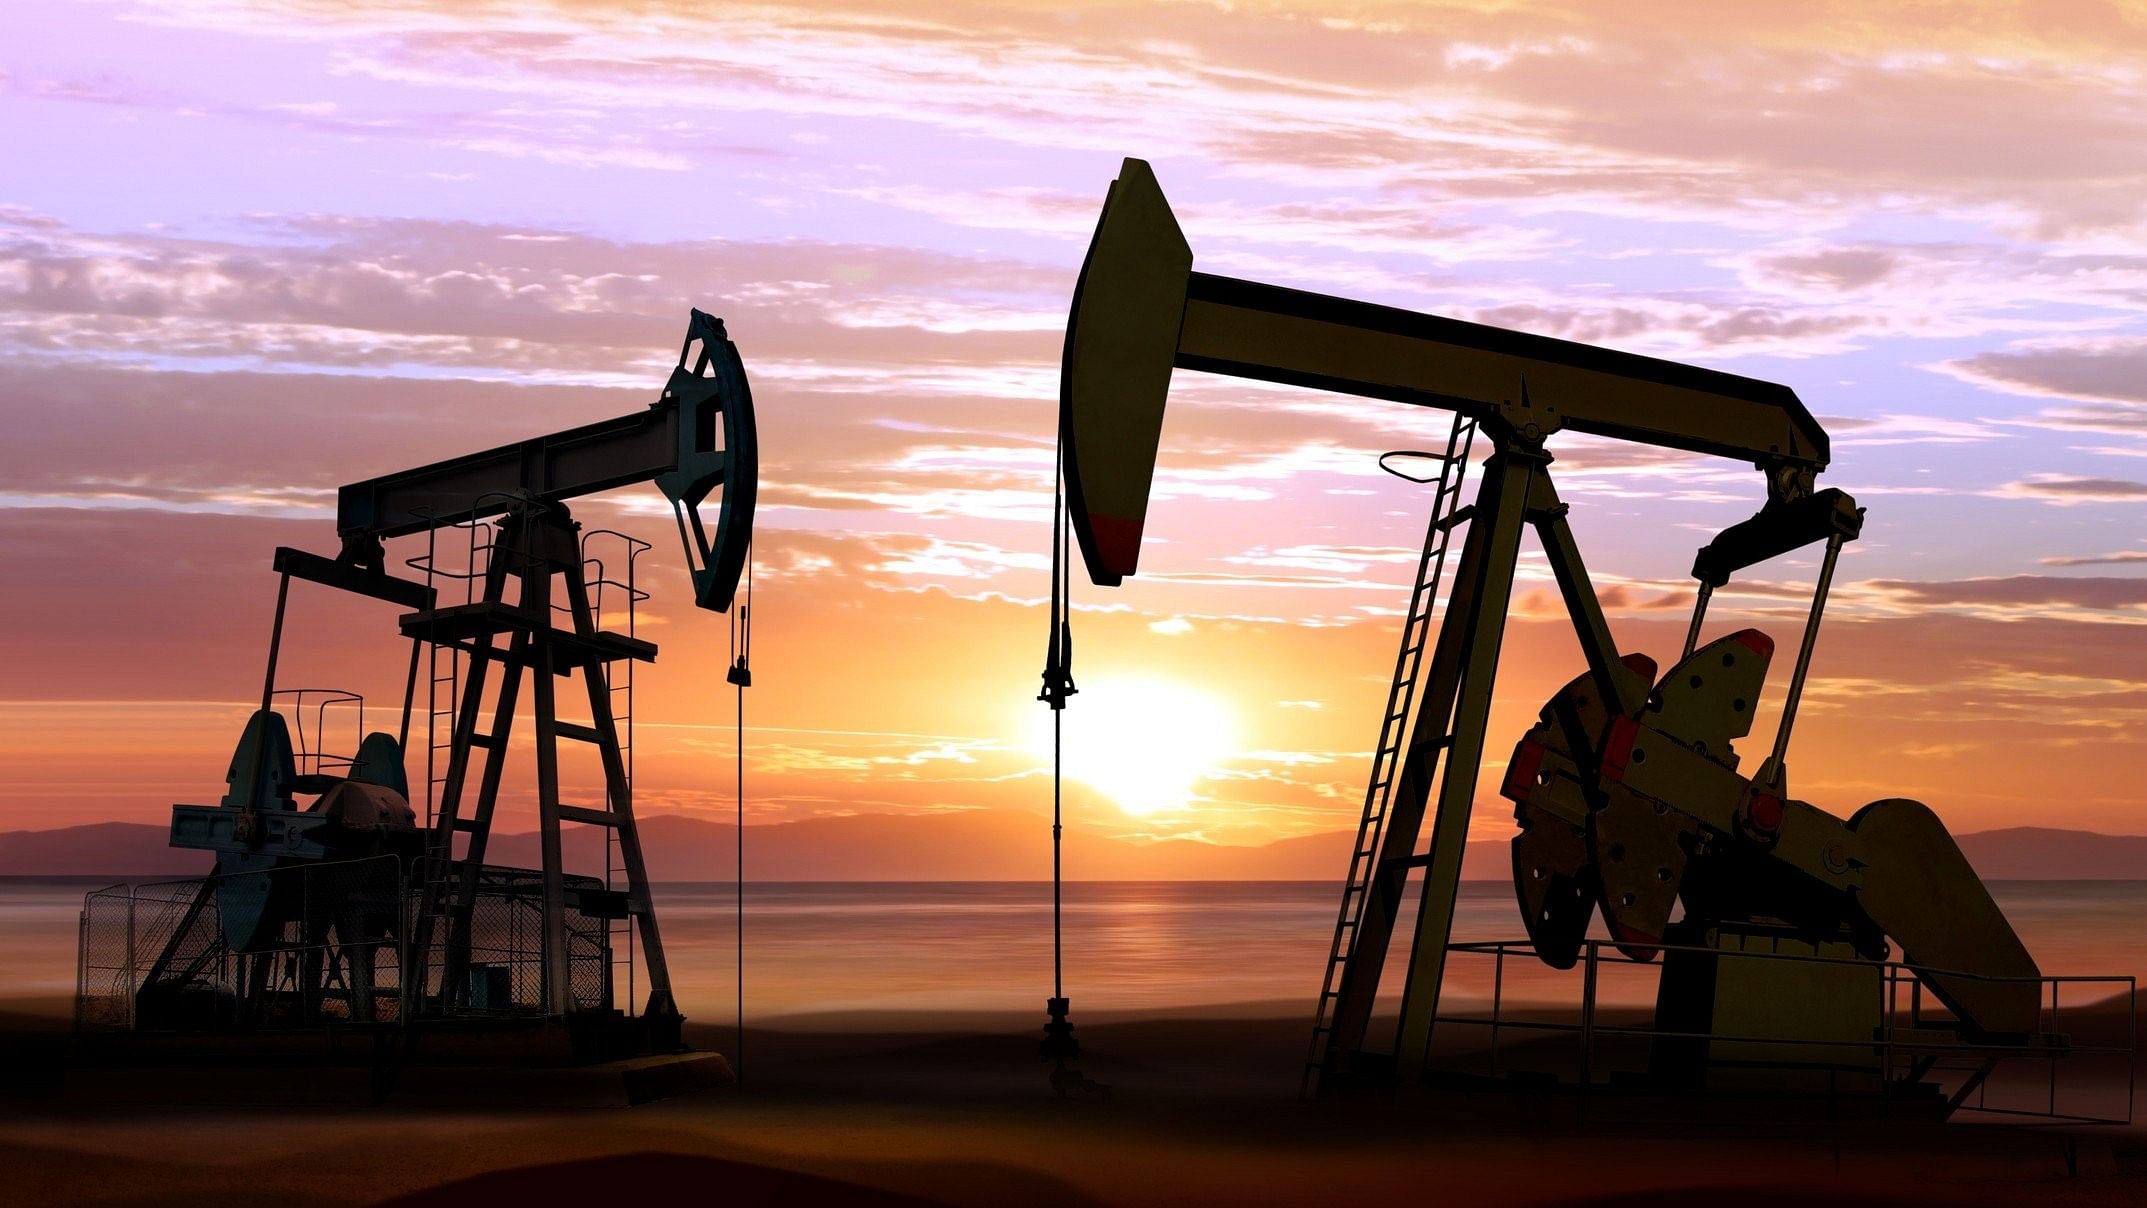 <div class="paragraphs"><p>Silhouette of oil pumps on sunset background.</p><p></p></div>